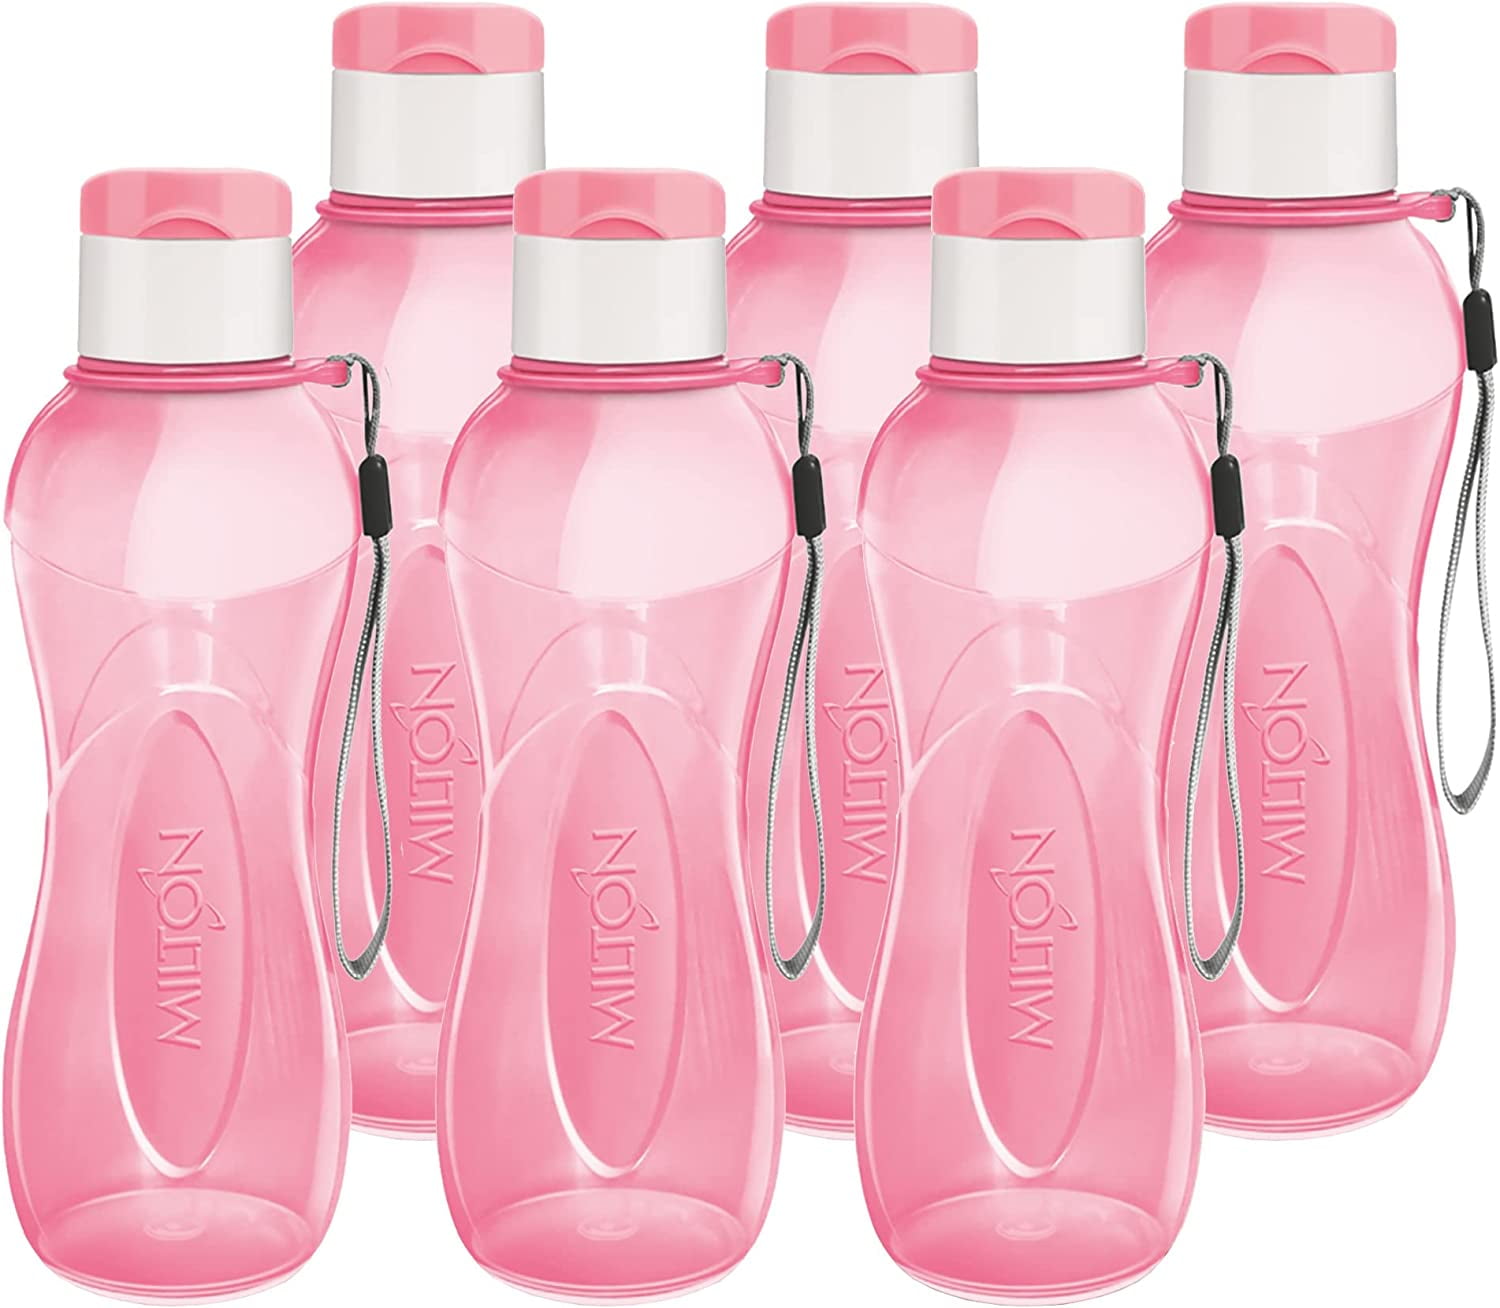 Milton Sports Water Bottle Kids Reusable Leakproof 25 oz 4-Pack Plastic Wide Mouth Large Big Drink Bottle BPA & Leak Free with Handle Strap Carrier